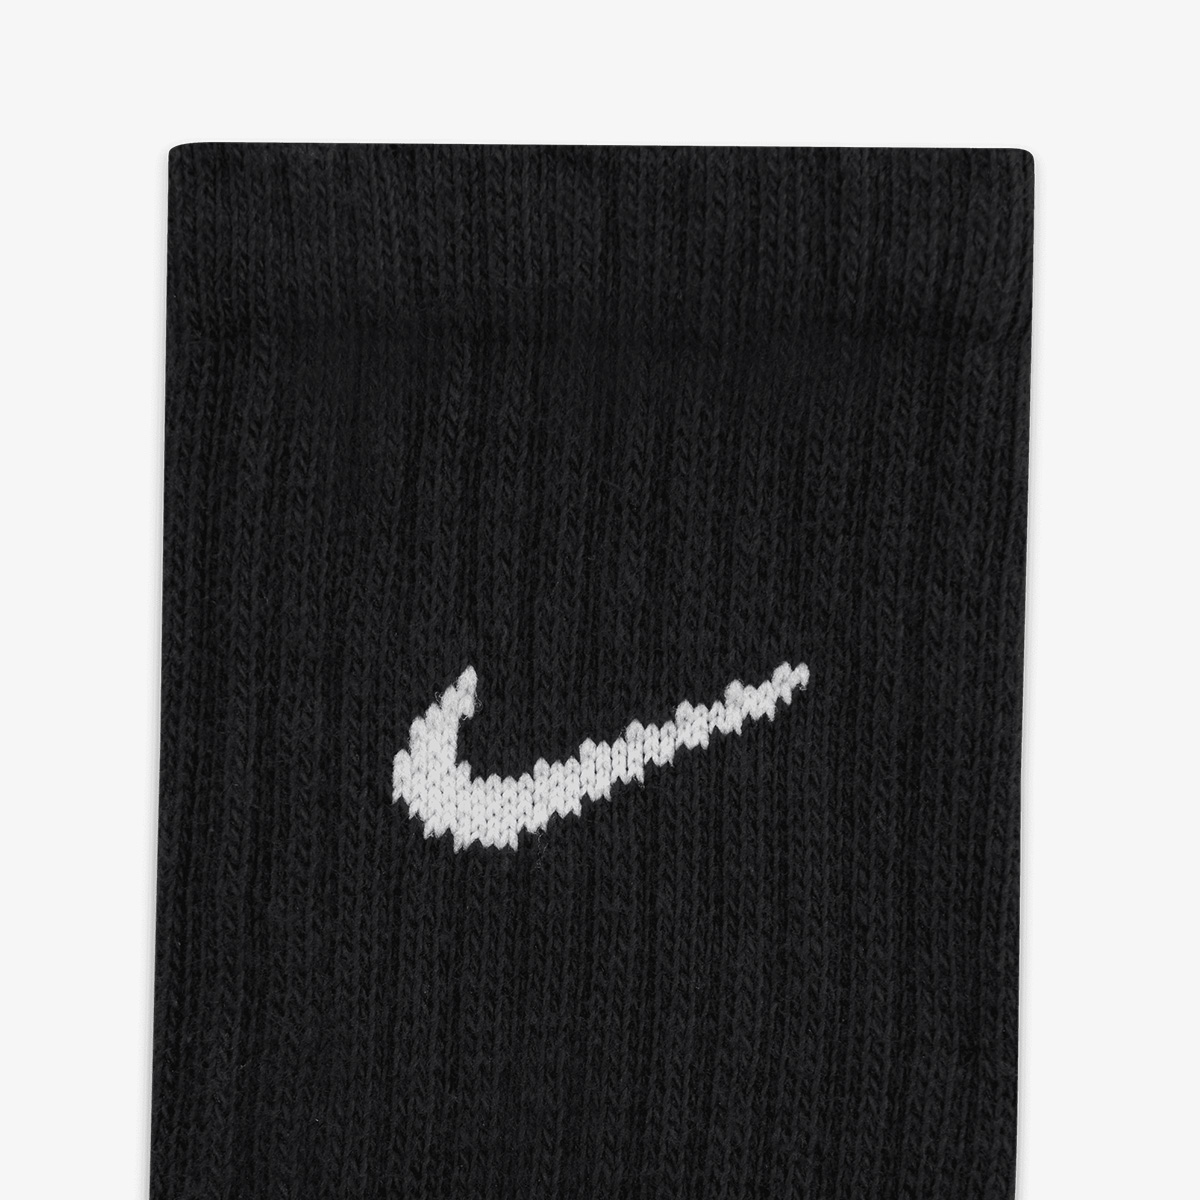 Nike Чорапи Cushioned 